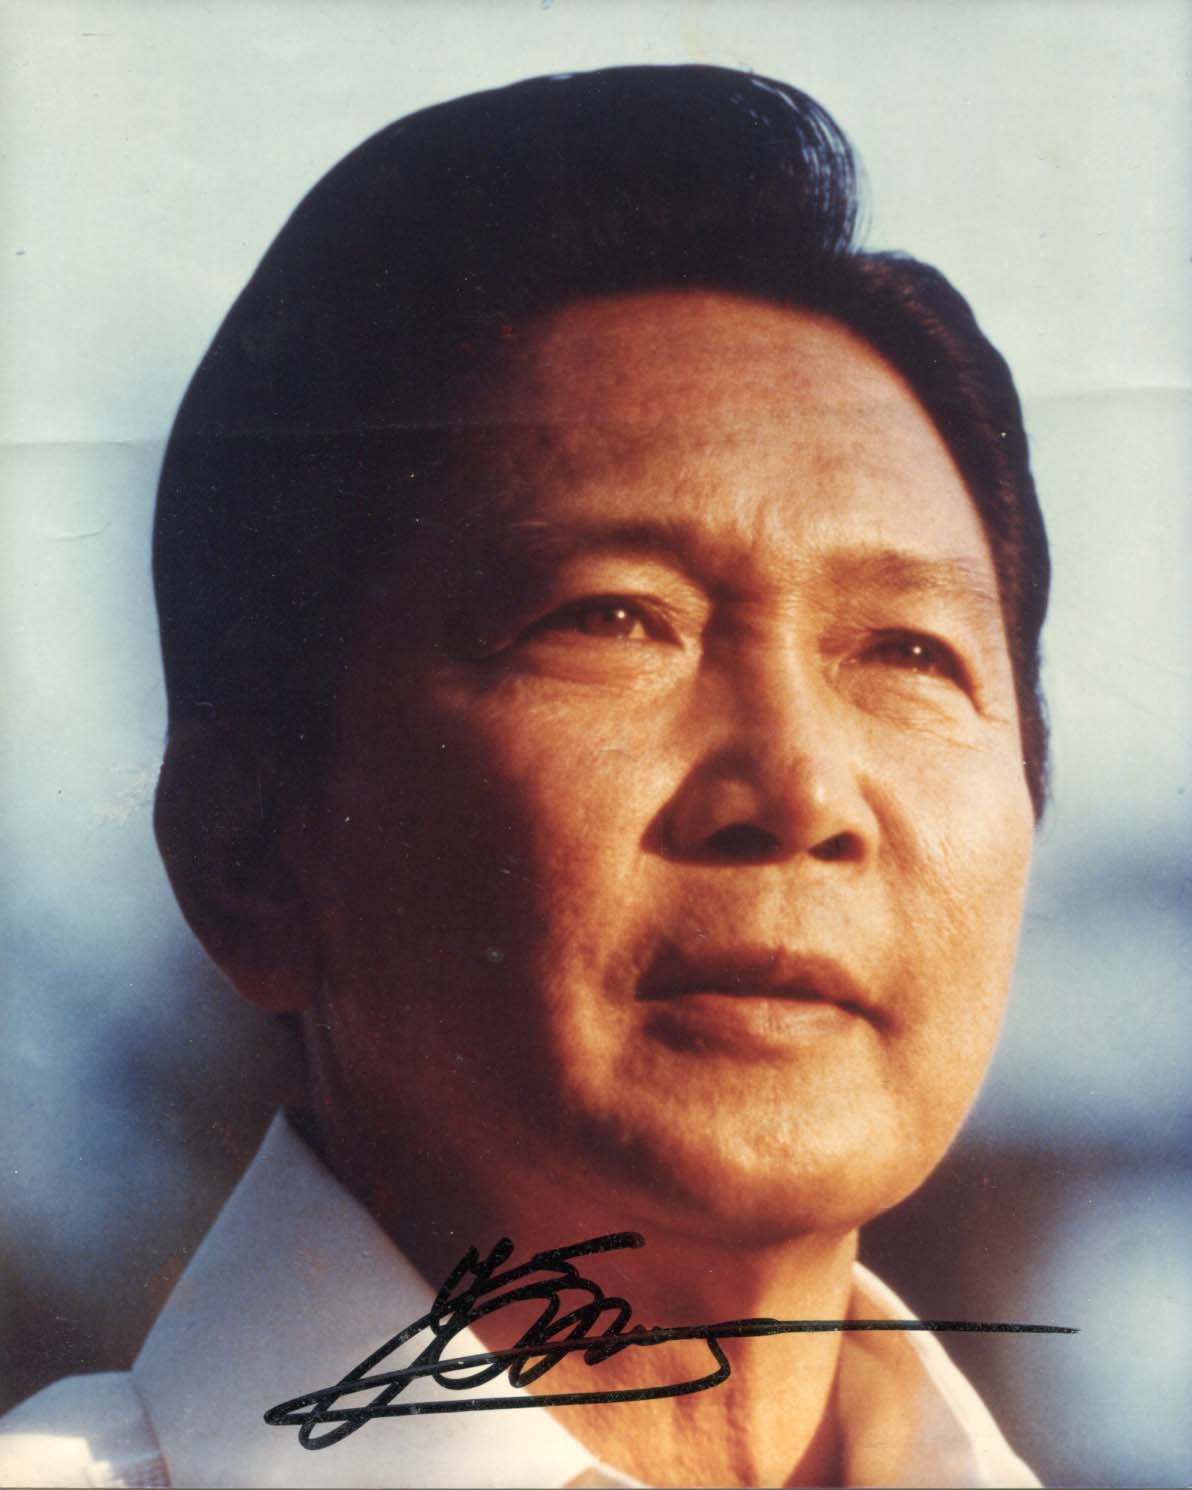 Ferdinand Emmanuel Edralin Marcos Autograph Autogramm | ID 7793900322965